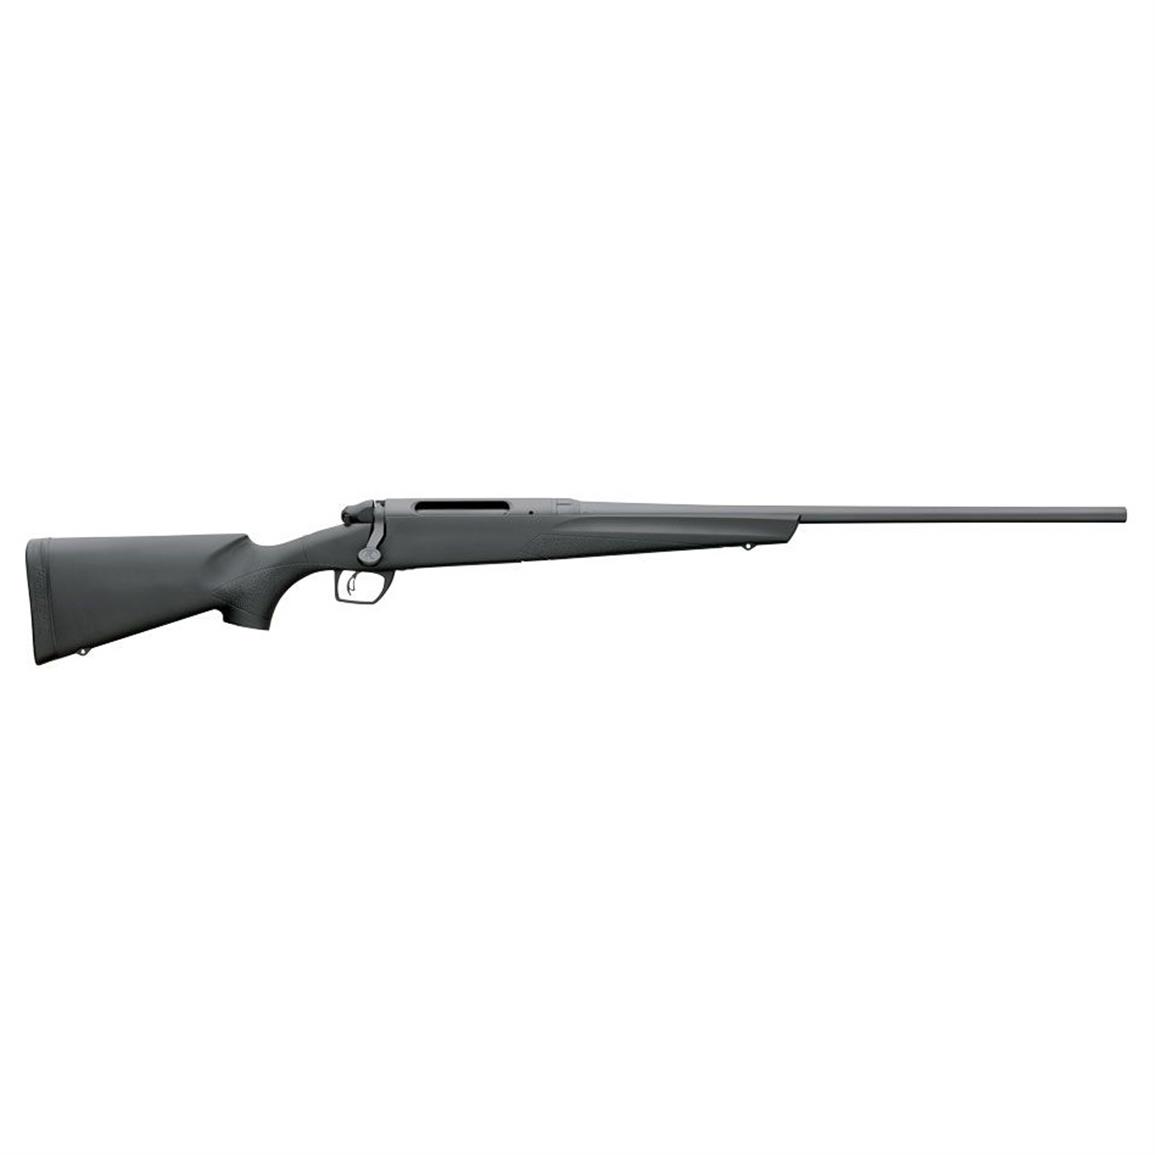 Remington 783, Bolt Action, .308 Winchester, 20" Barrel, 3-9x40mm Scope, 4 1 Rounds